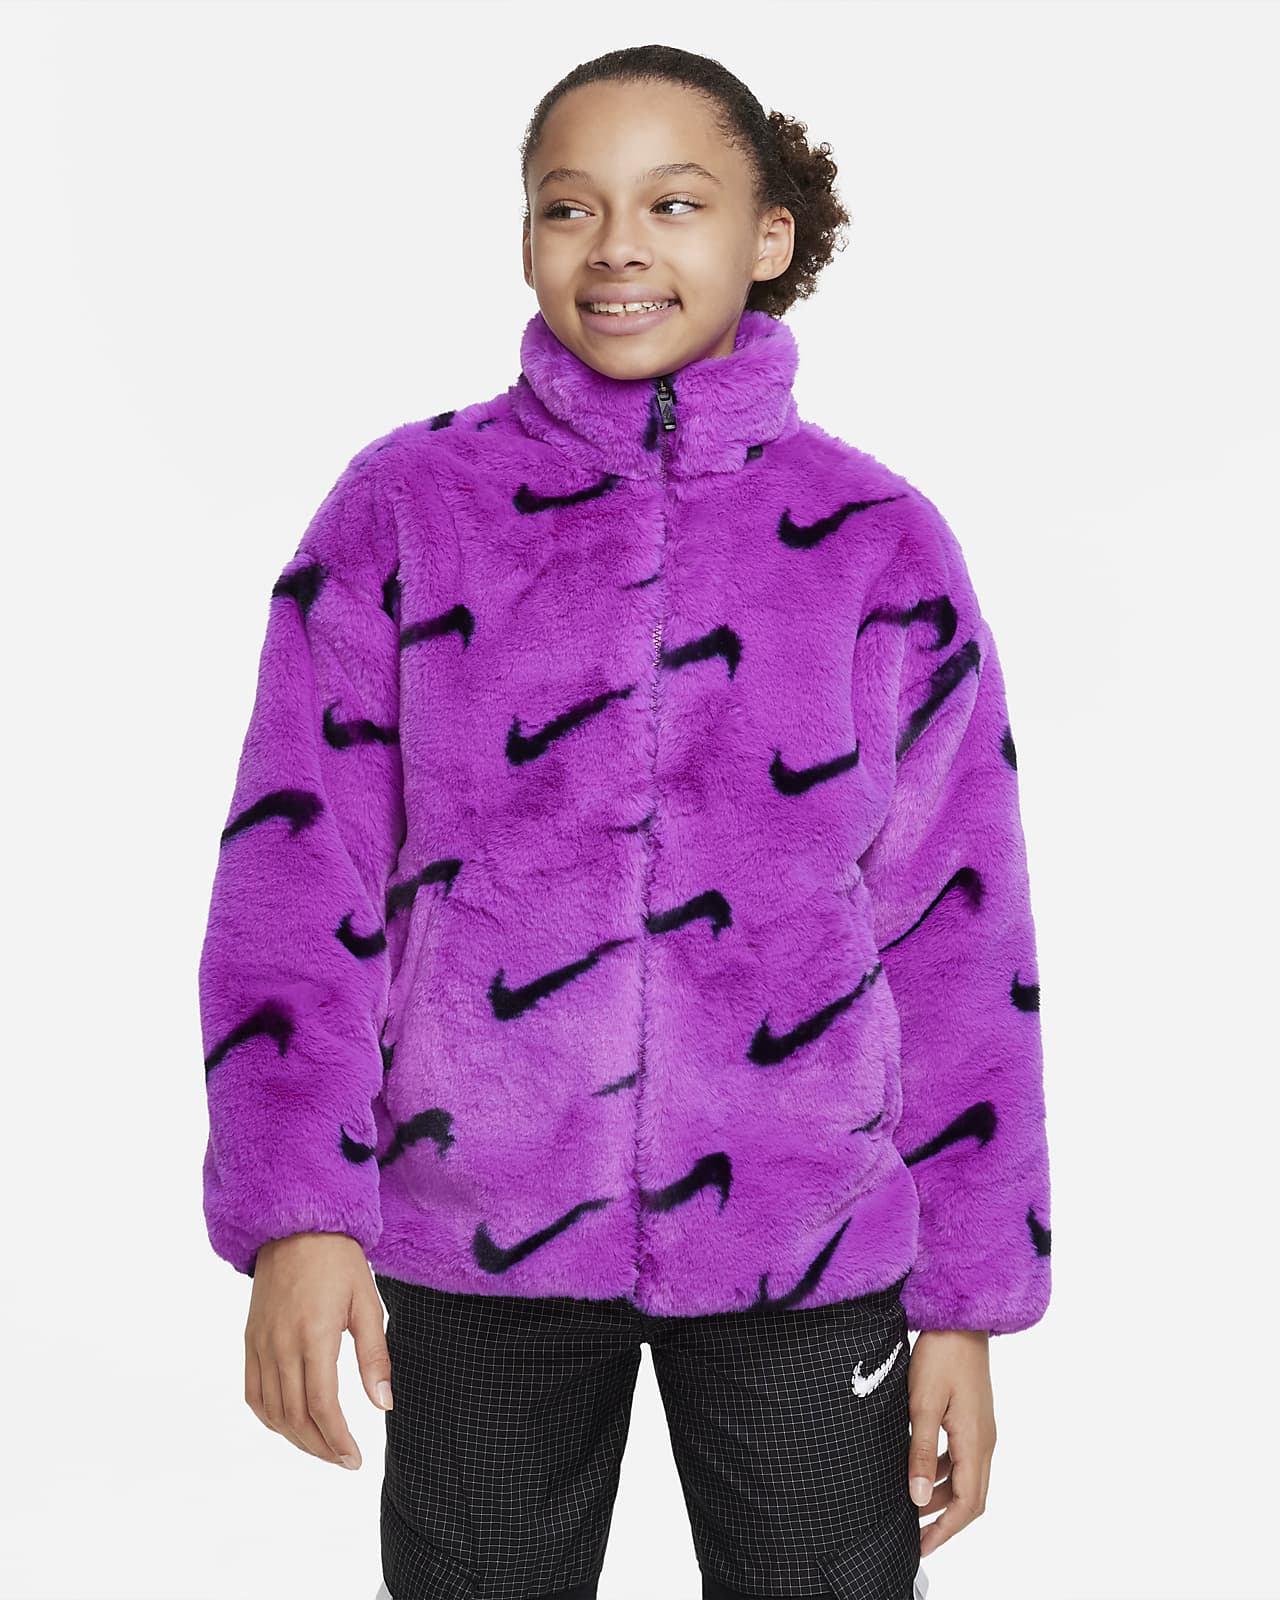 Nike Sportswear műszőrme kabát nagyobb gyerekeknek